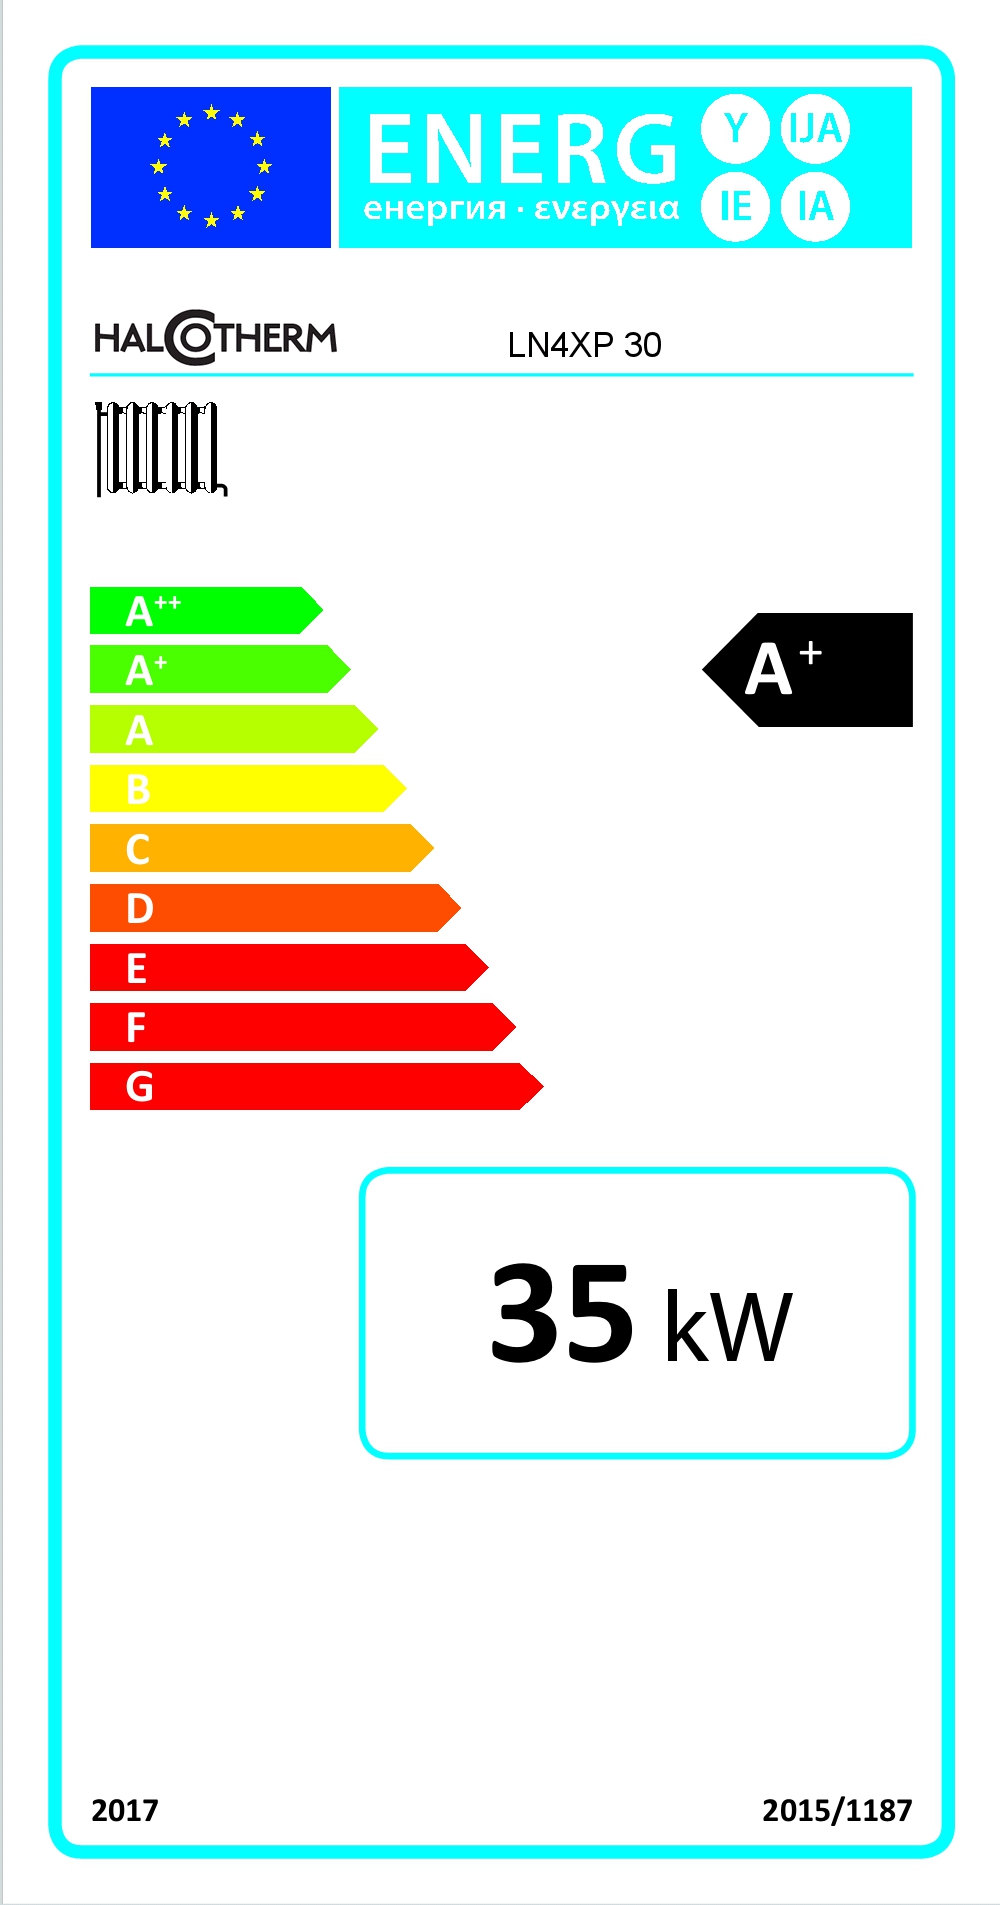 Energy Label LN4XP30